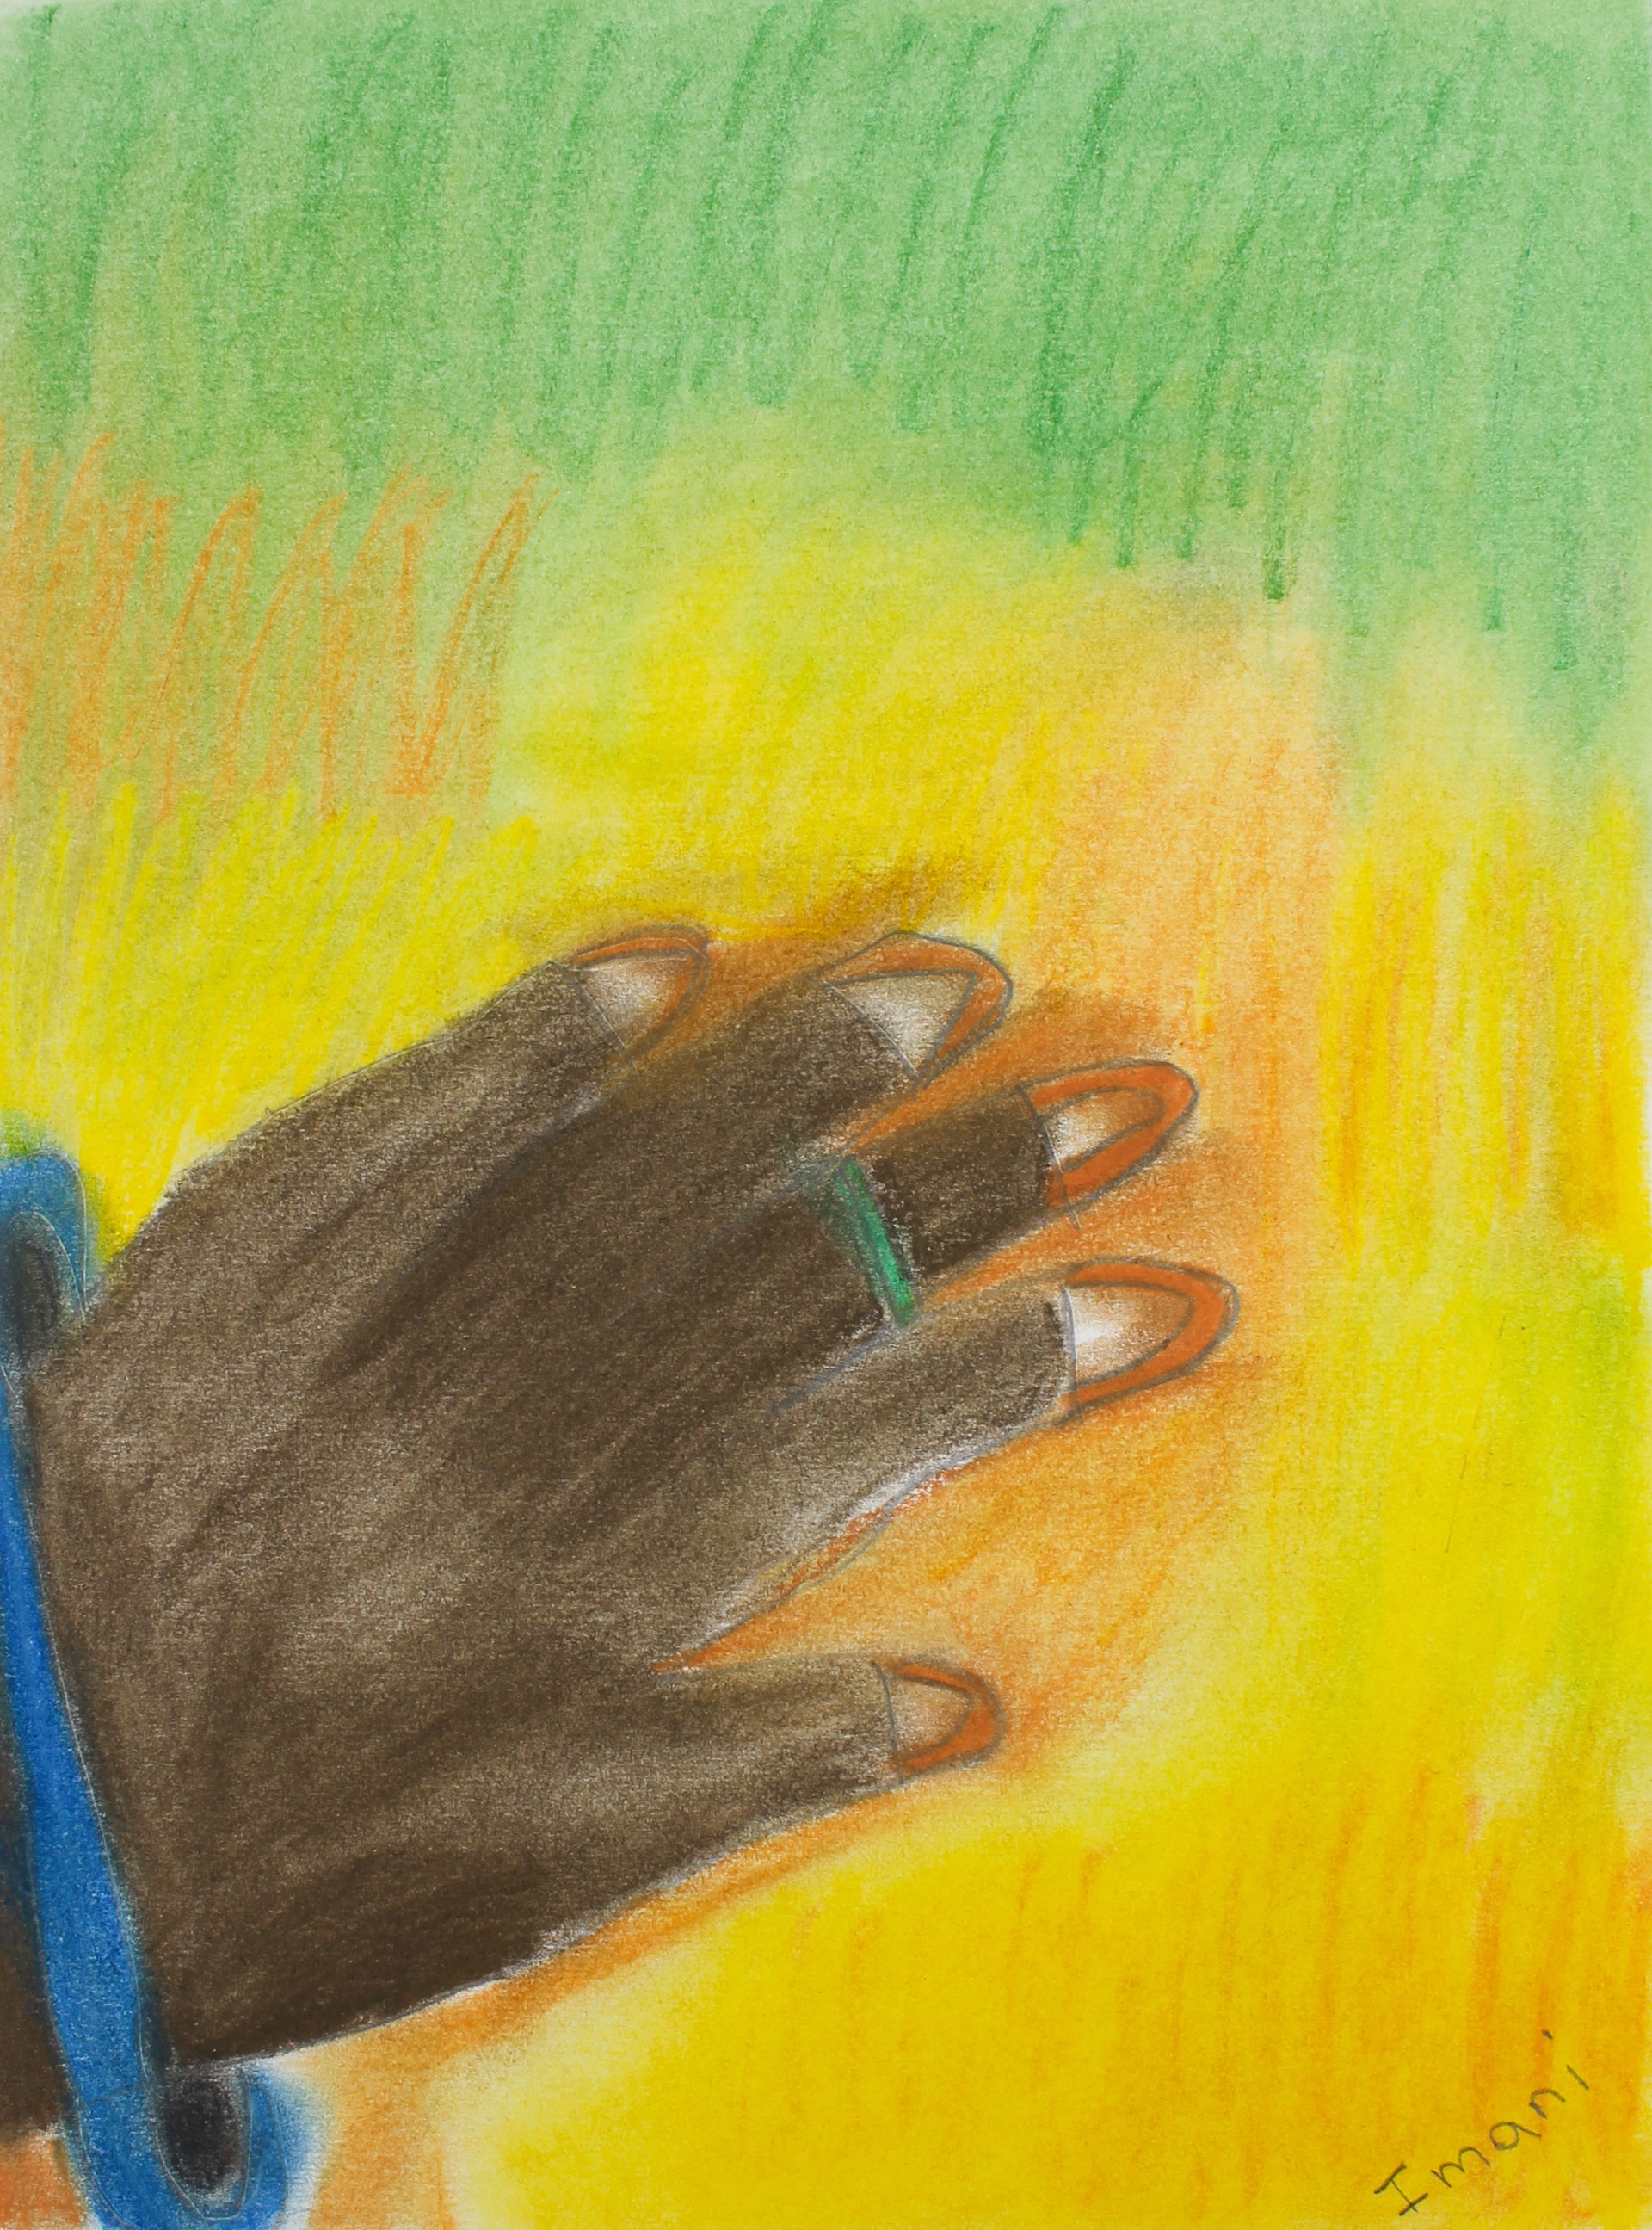 God's Hand by Imani Turner